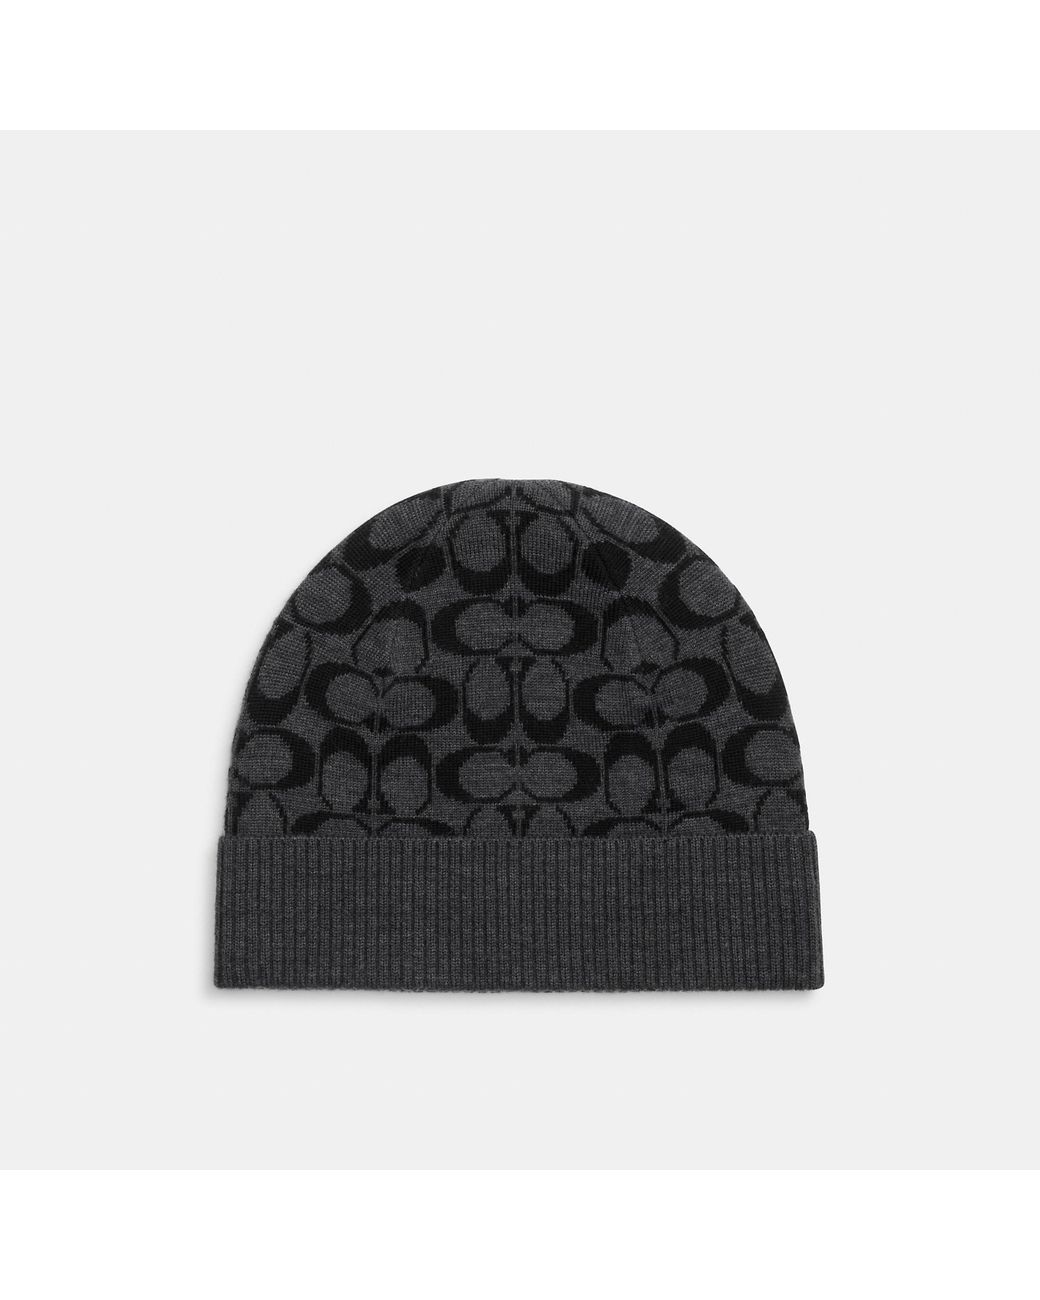 COACH Signature Knit Beanie in Black | Lyst